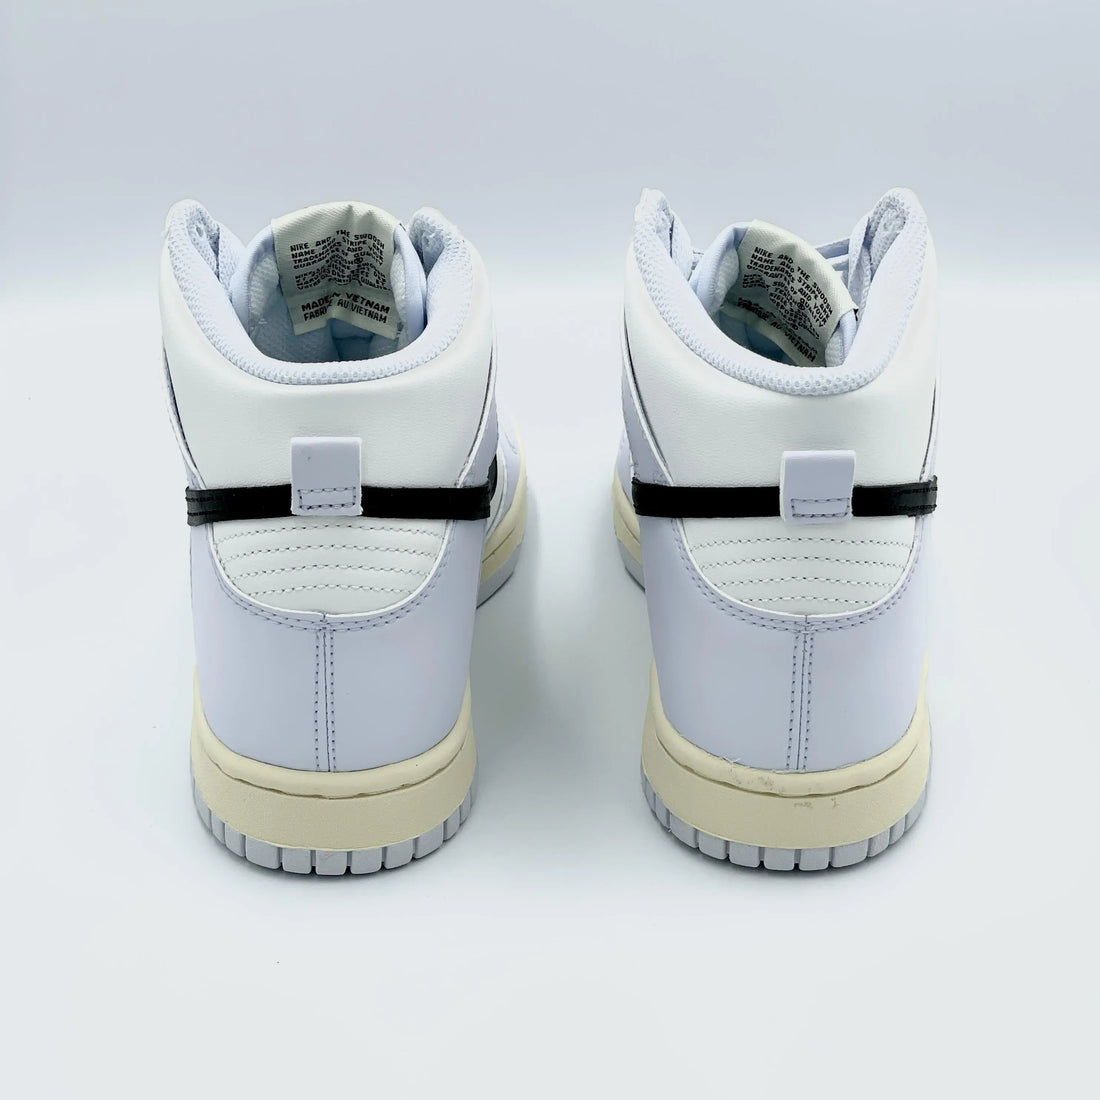 Nike Dunk High Aluminum  SA Sneakers